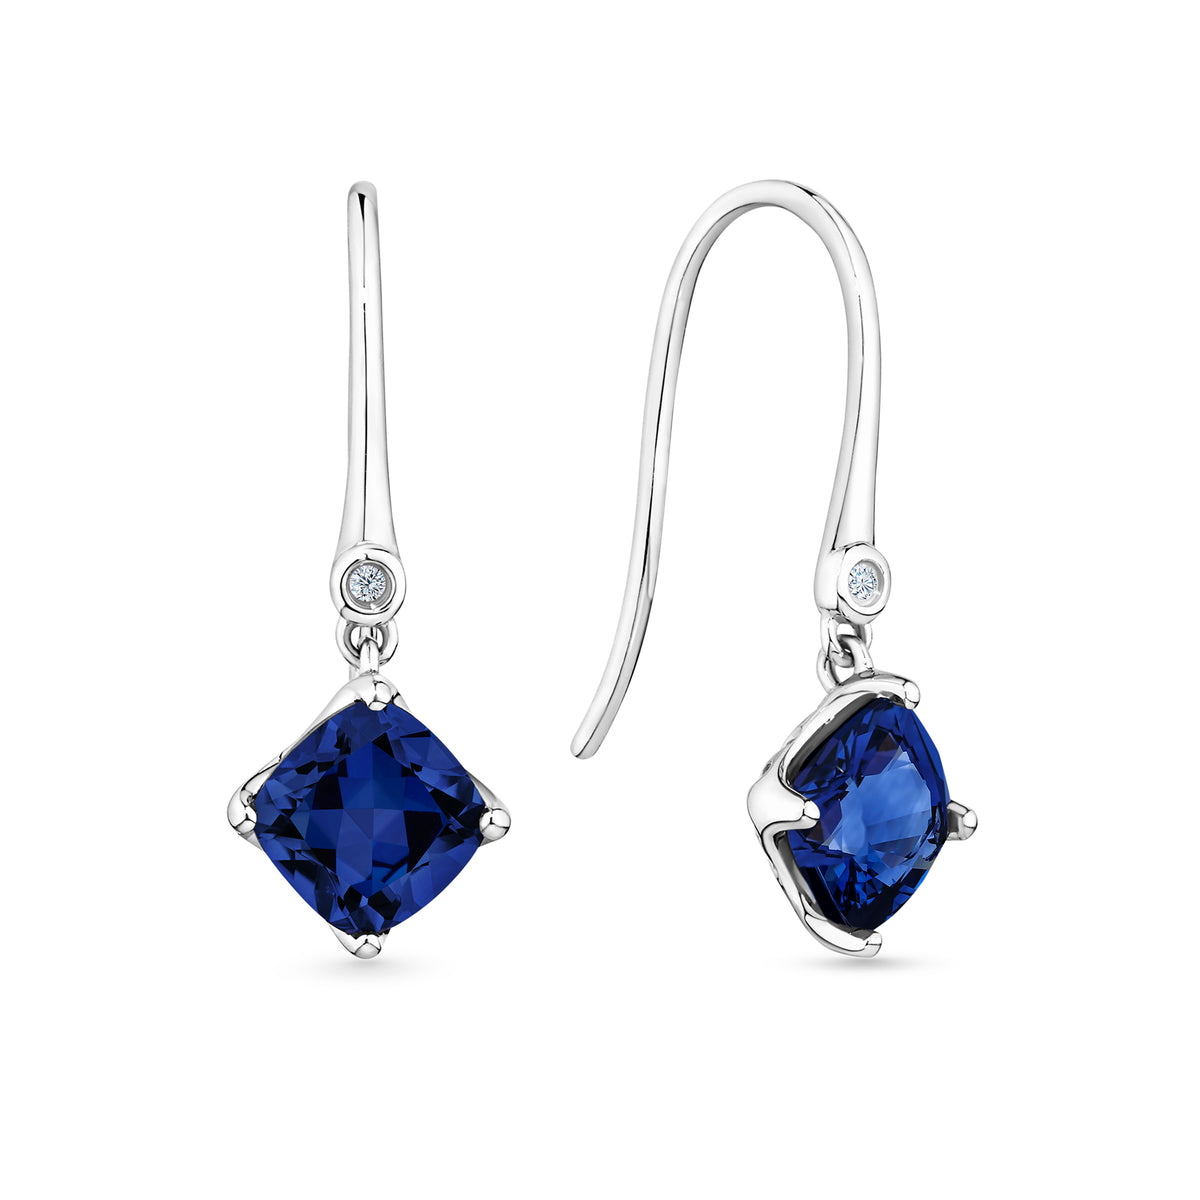 Update more than 134 blue sapphire earrings australia super hot